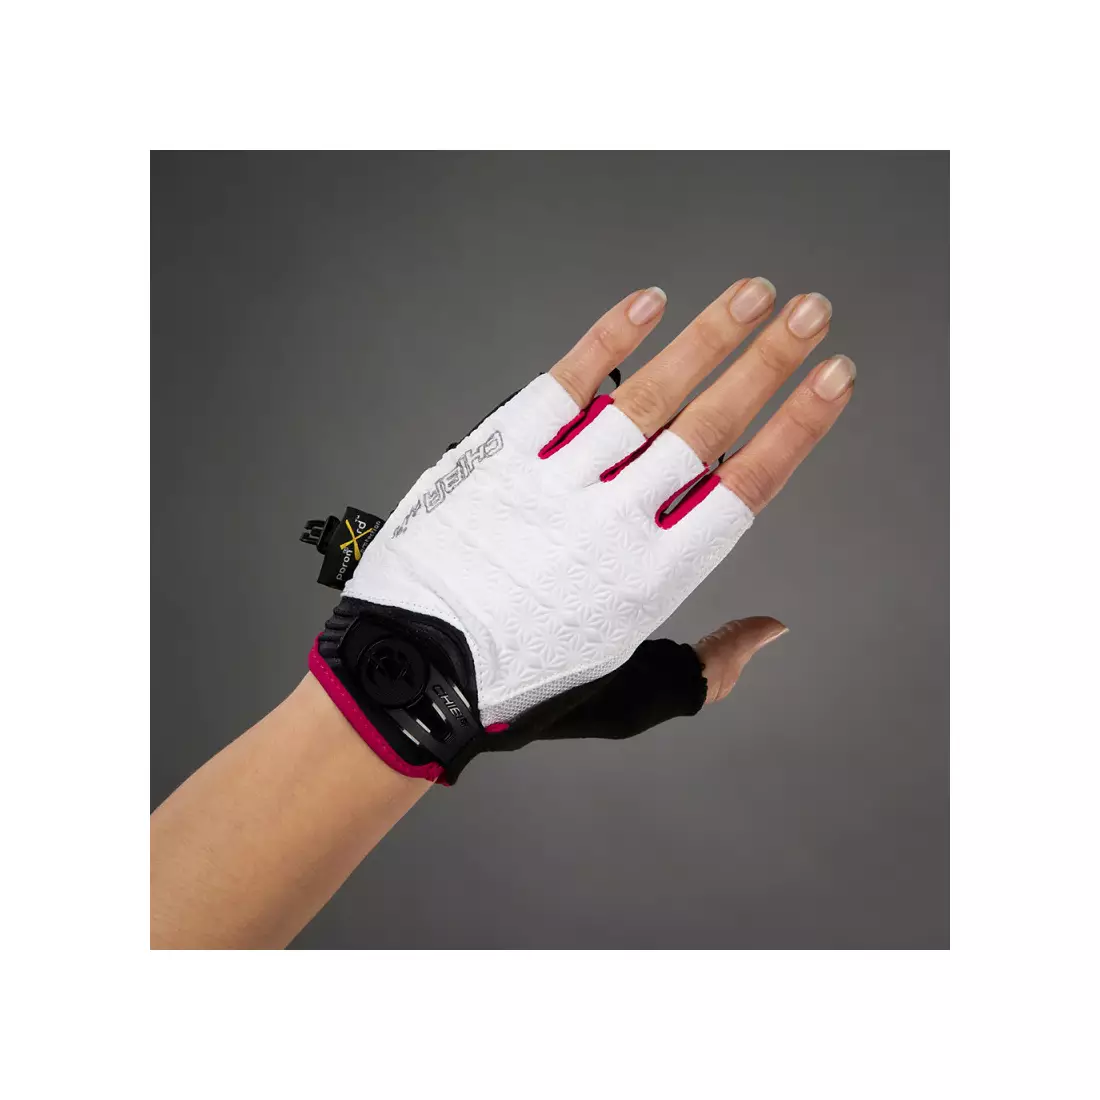 CHIBA LADY AIR PLUS women's cycling gloves, White